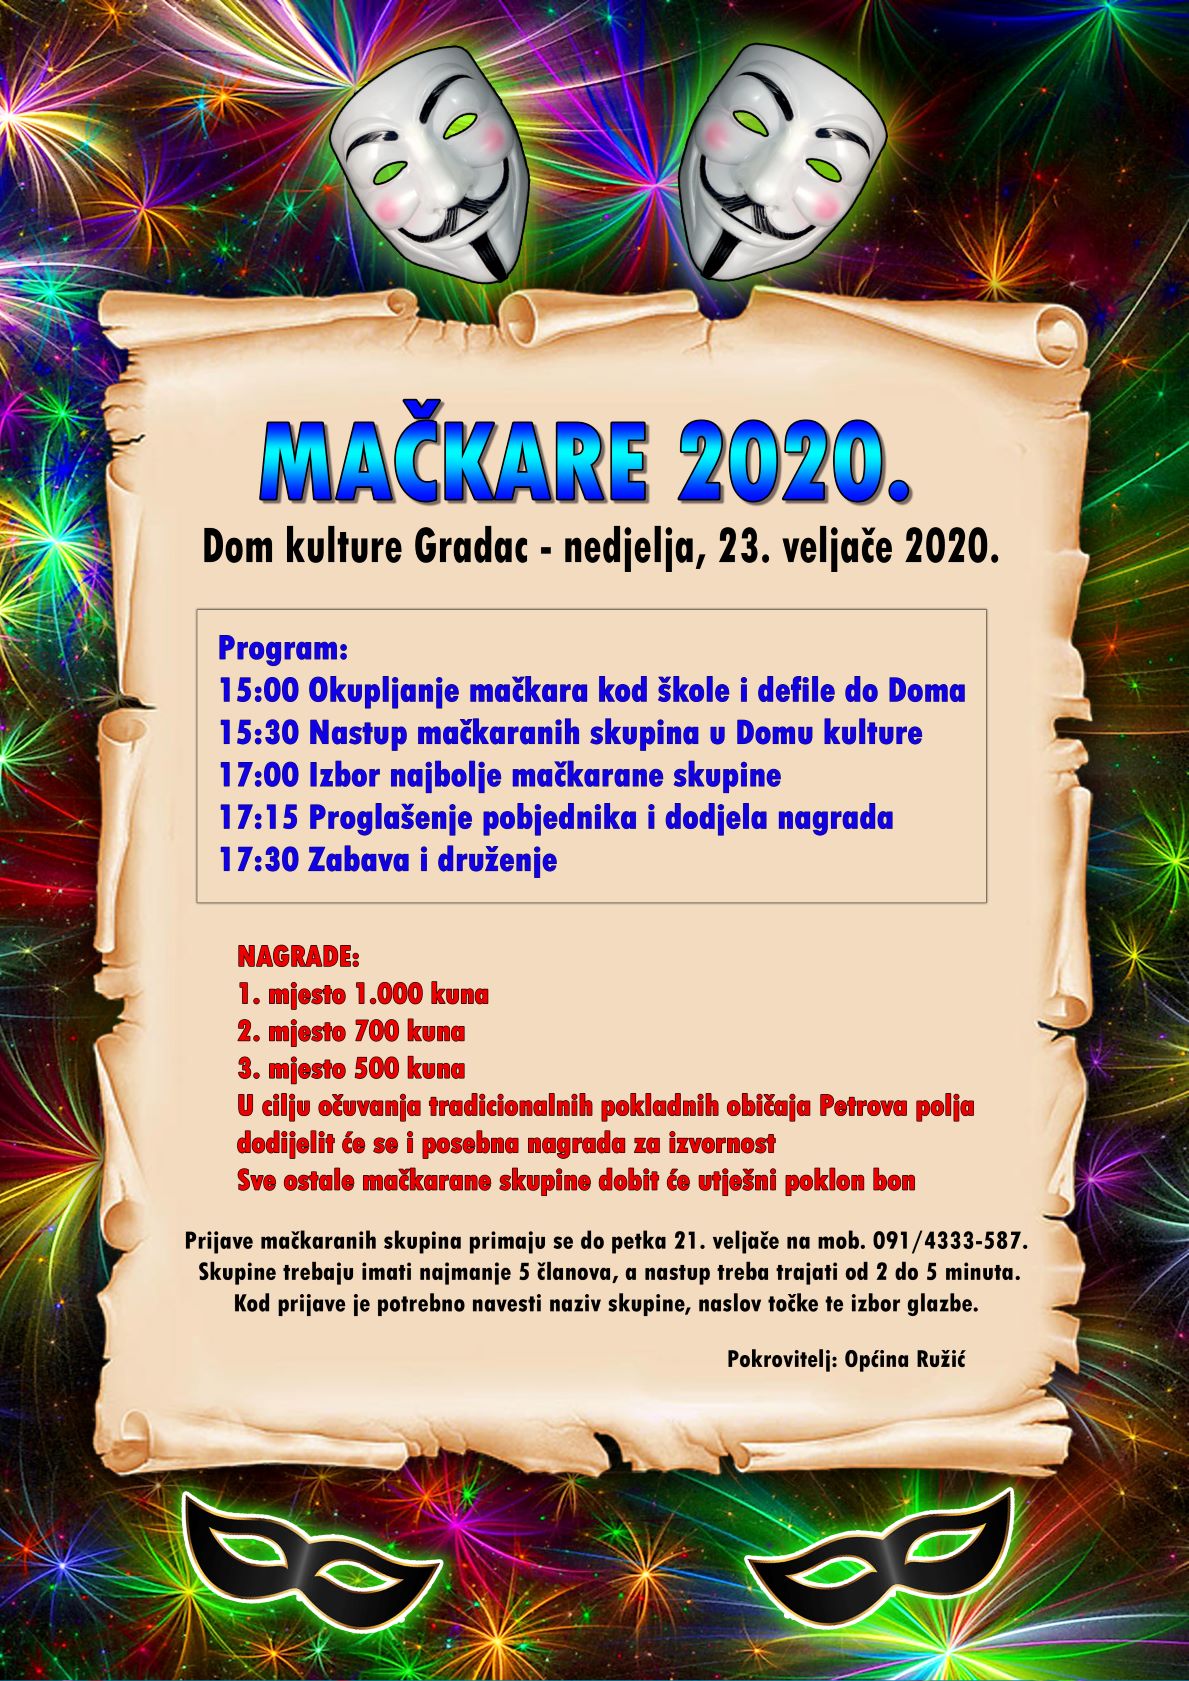 Mackare 2020